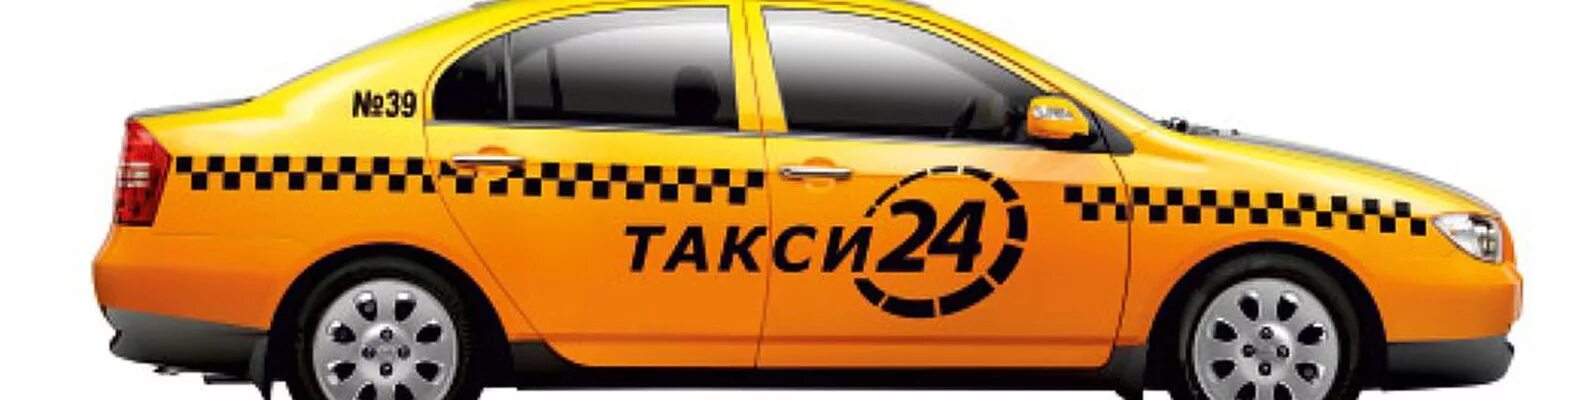 Такси город кисловодск. Машина "такси". Такси картинки. Такси 24 24 24. Такси в городе.